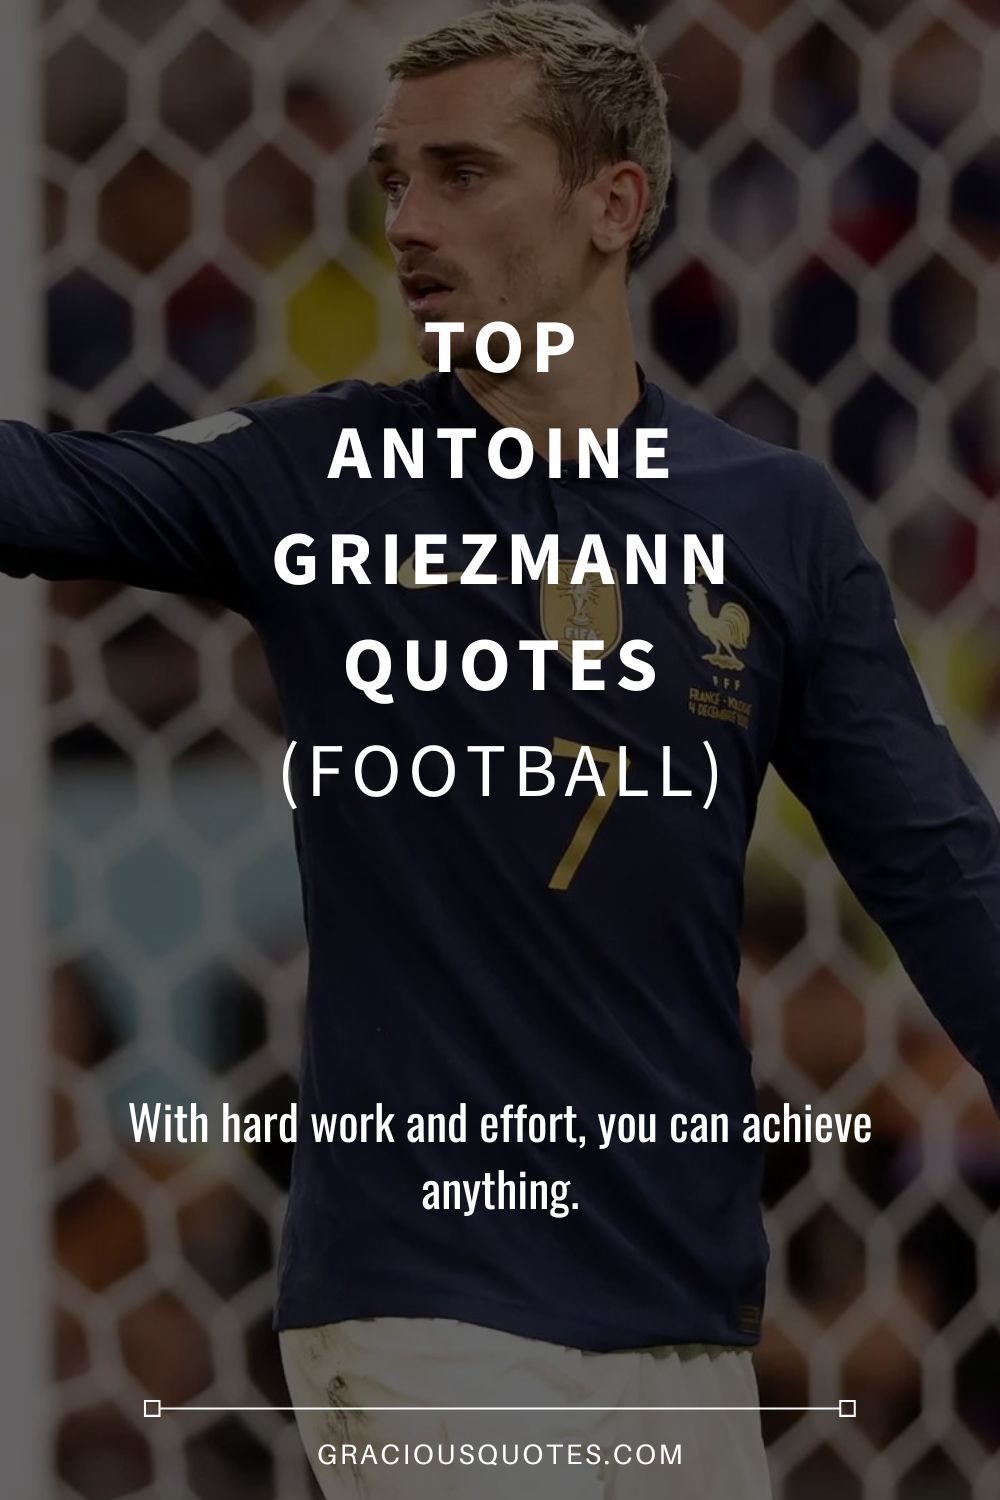 Top Antoine Griezmann Quotes (FOOTBALL) - Gracious Quotes